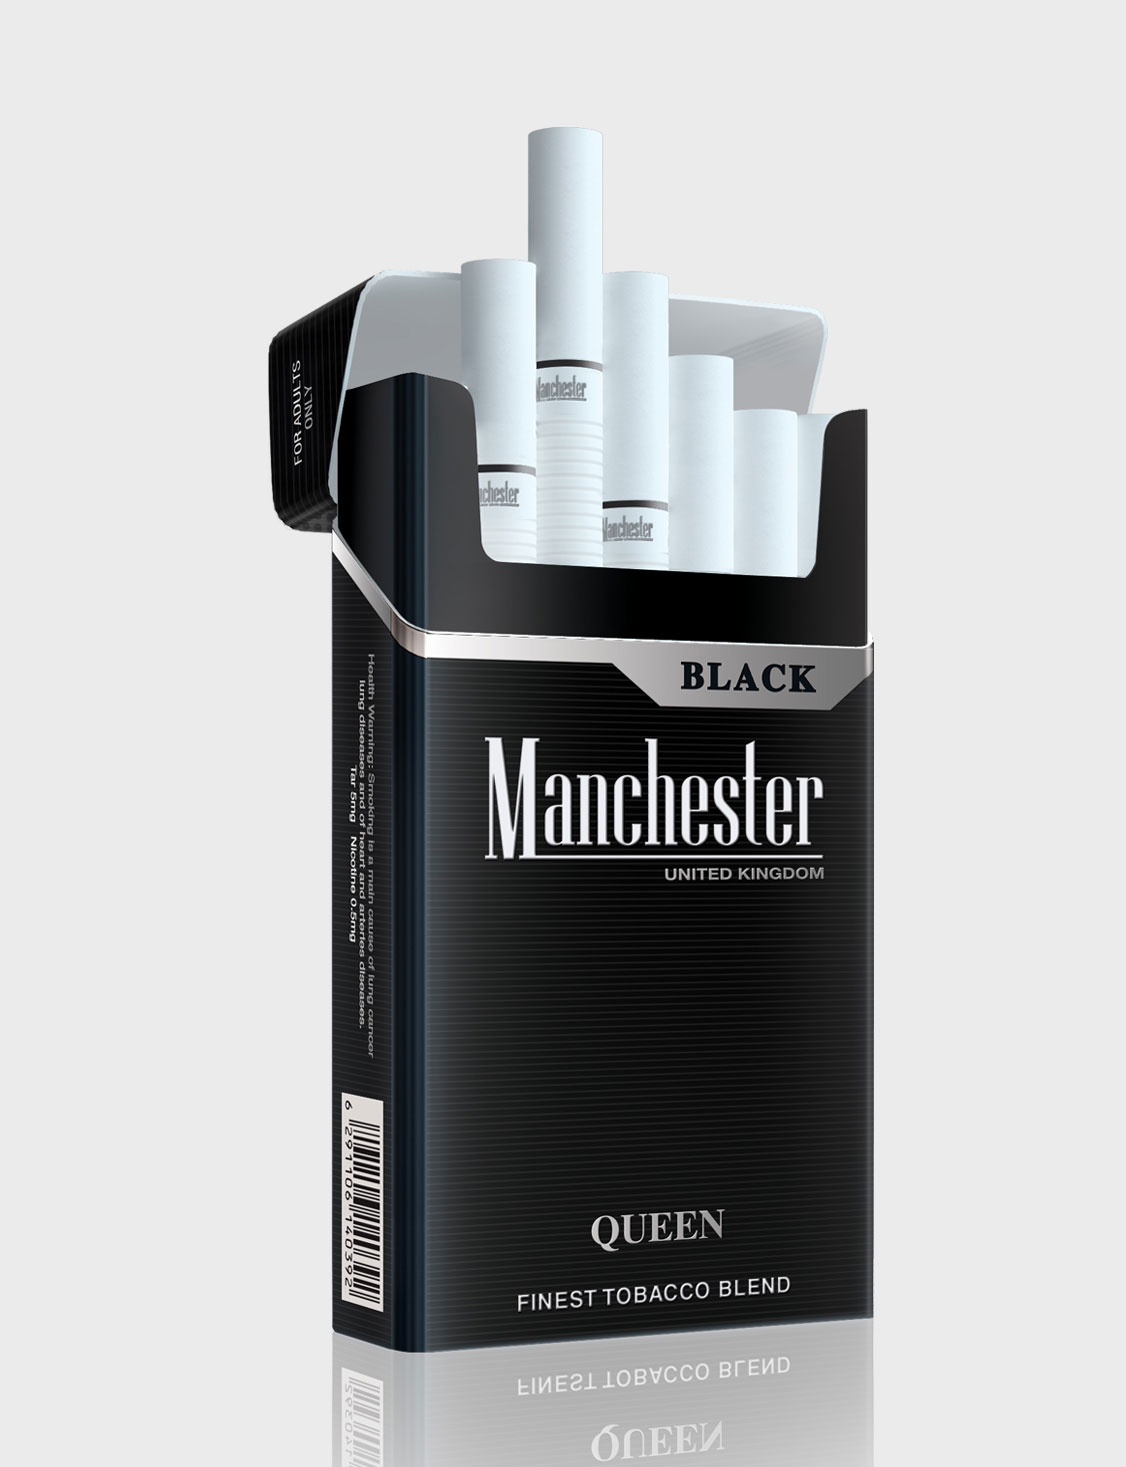 Манчестер компакт сигареты. Сигареты Манчестер Блэк компакт. Манчестер нано Блэк сигареты. Сигареты Манчестер Юнайтед кингдом. Manchester сигареты Compact Blue.